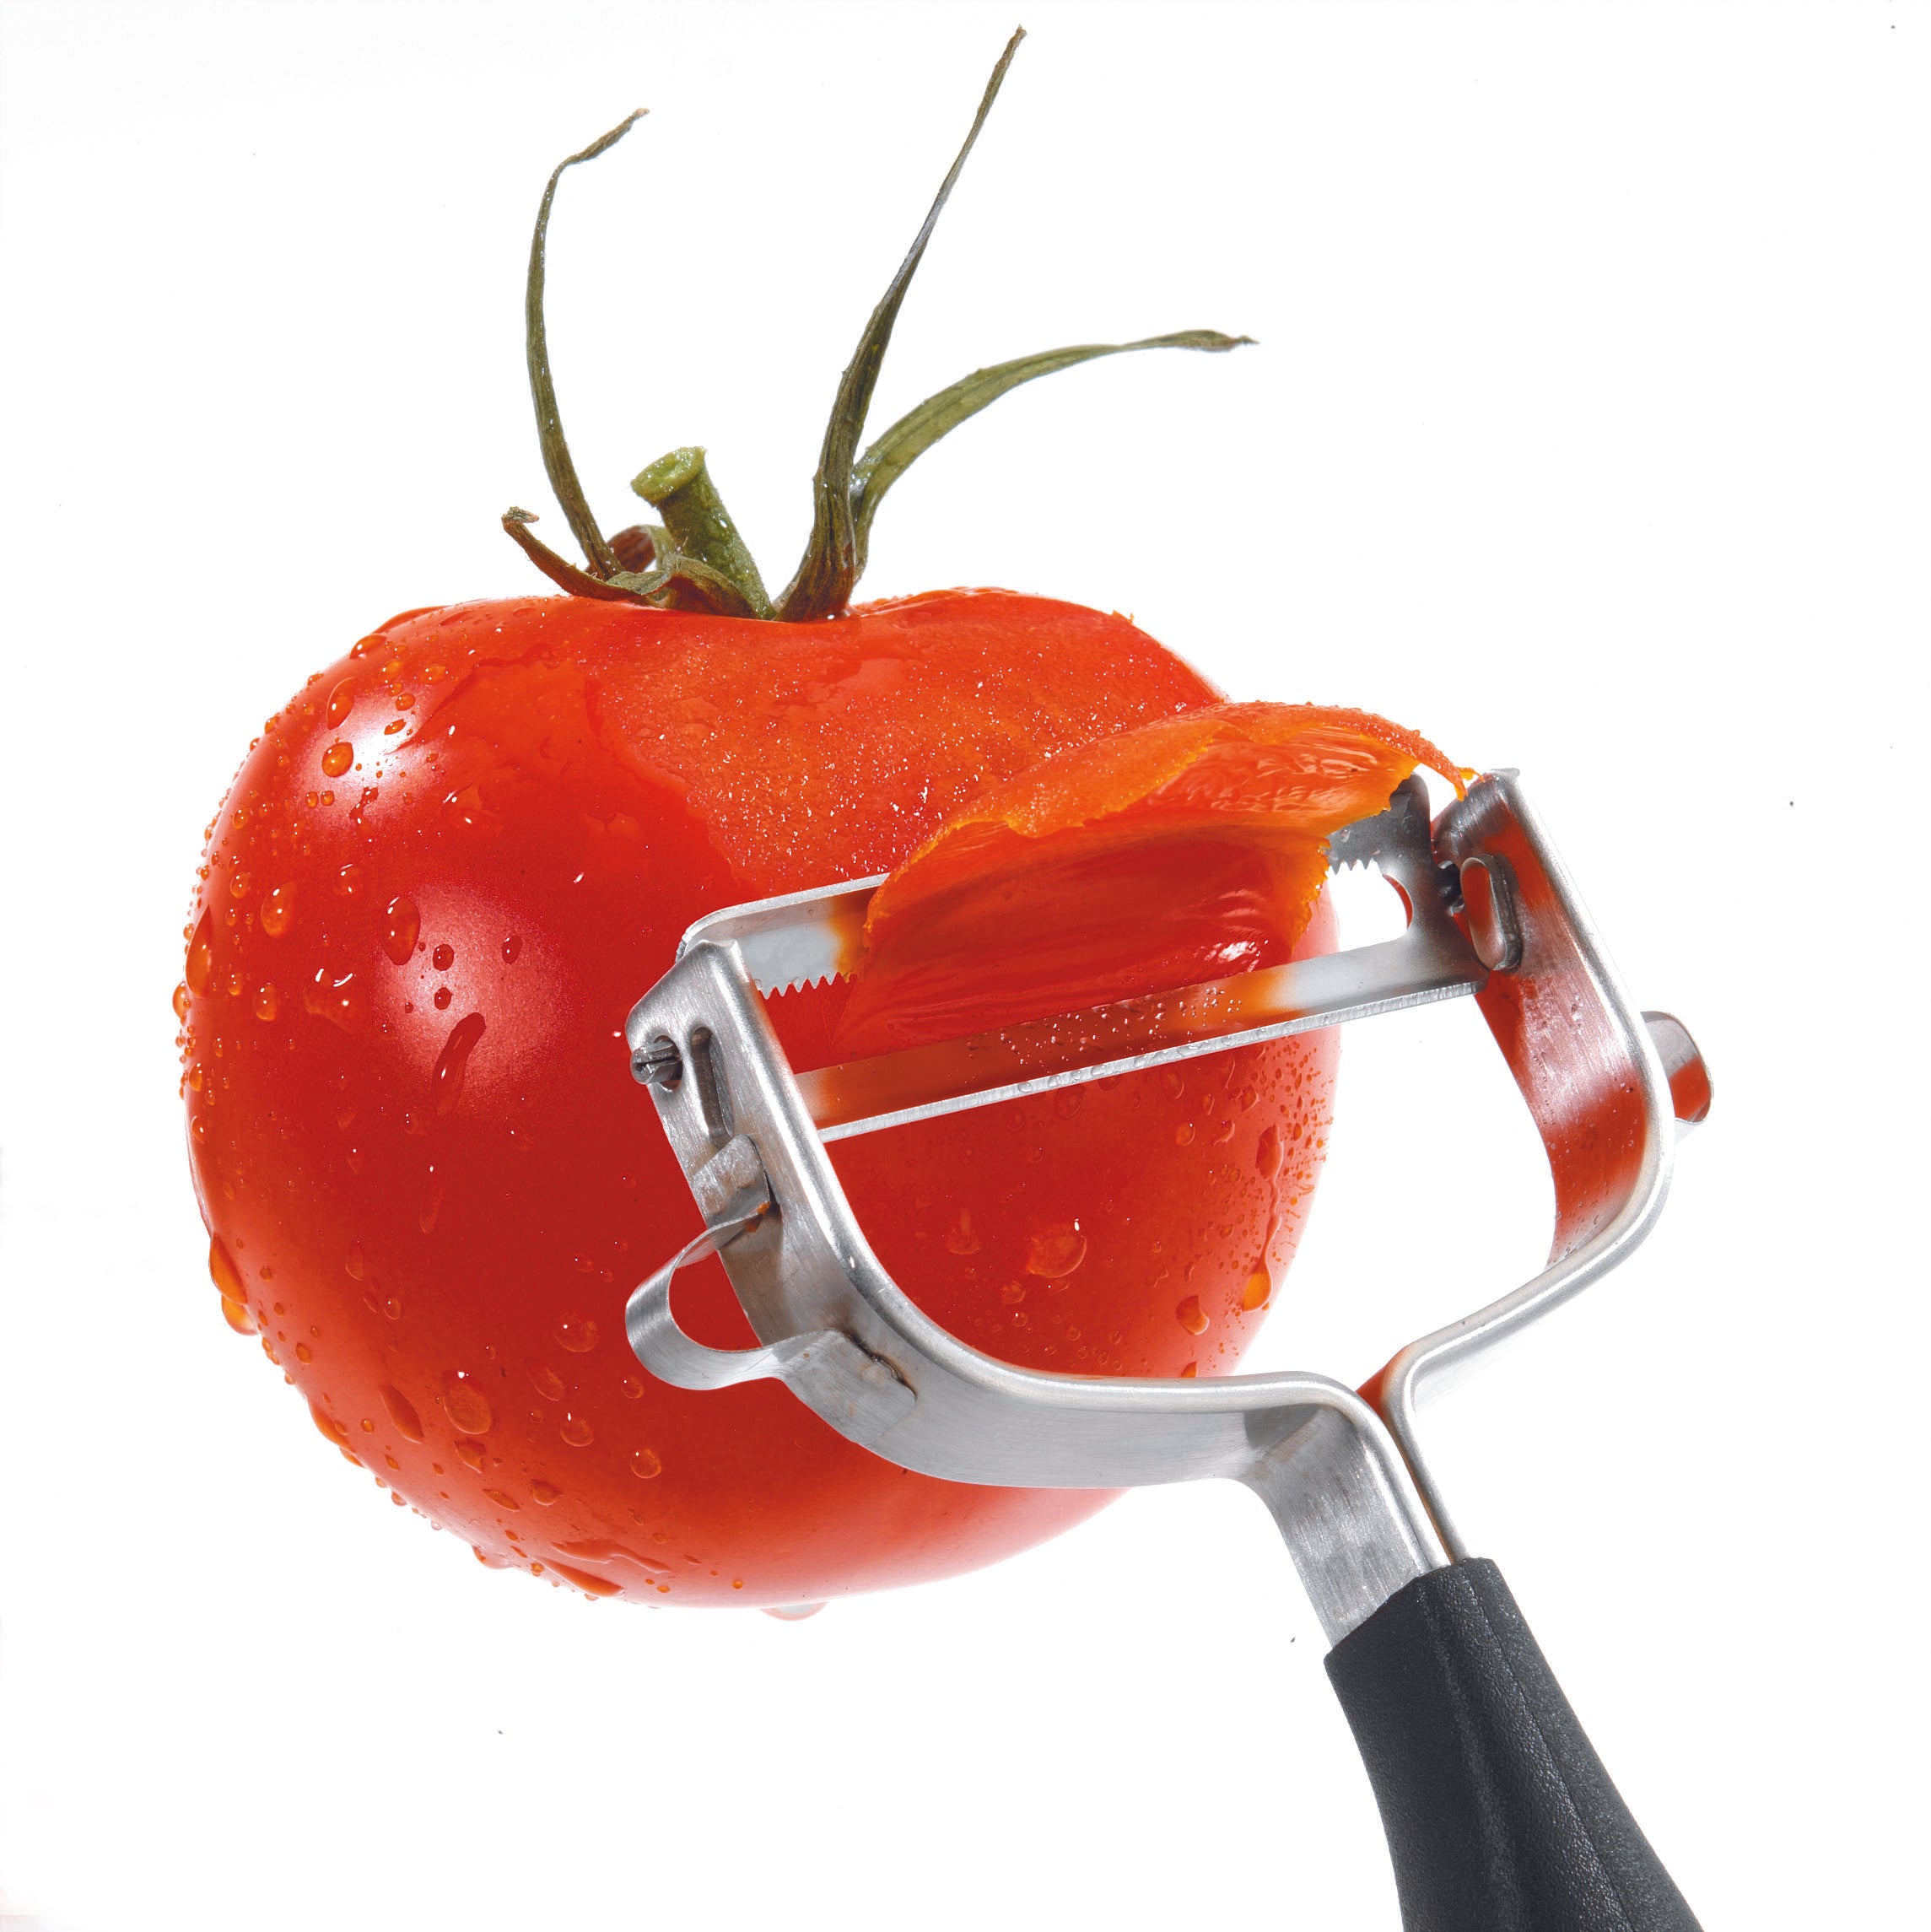 Nonoji TMP-03 Peeler Tomato Peeler III Red